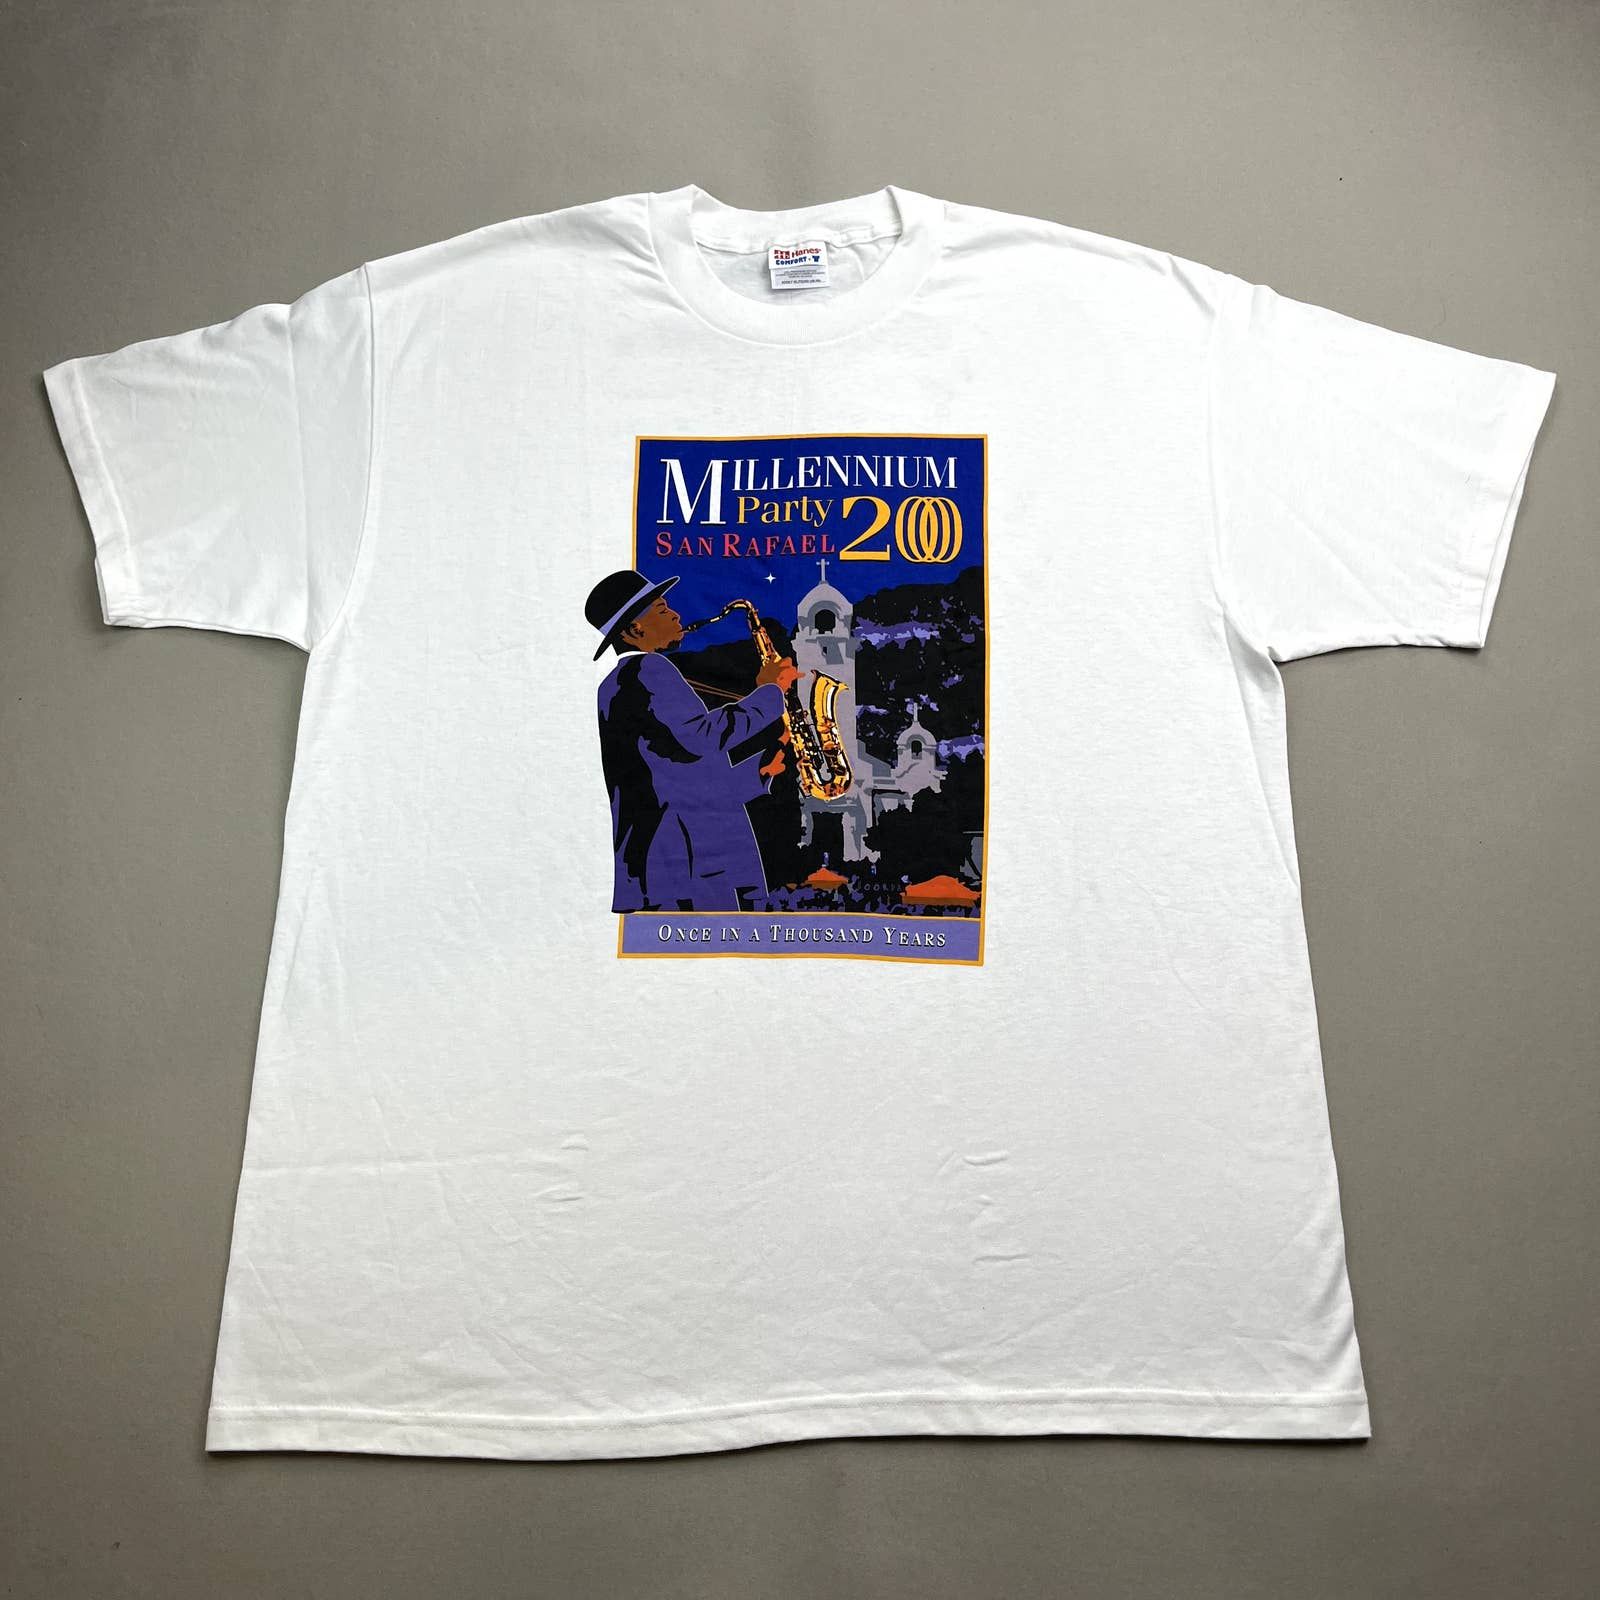 Vintage Vintage Jazz Music T-Shirt XL White Huey Lewis Winery Art Size US XL / EU 56 / 4 - 1 Preview